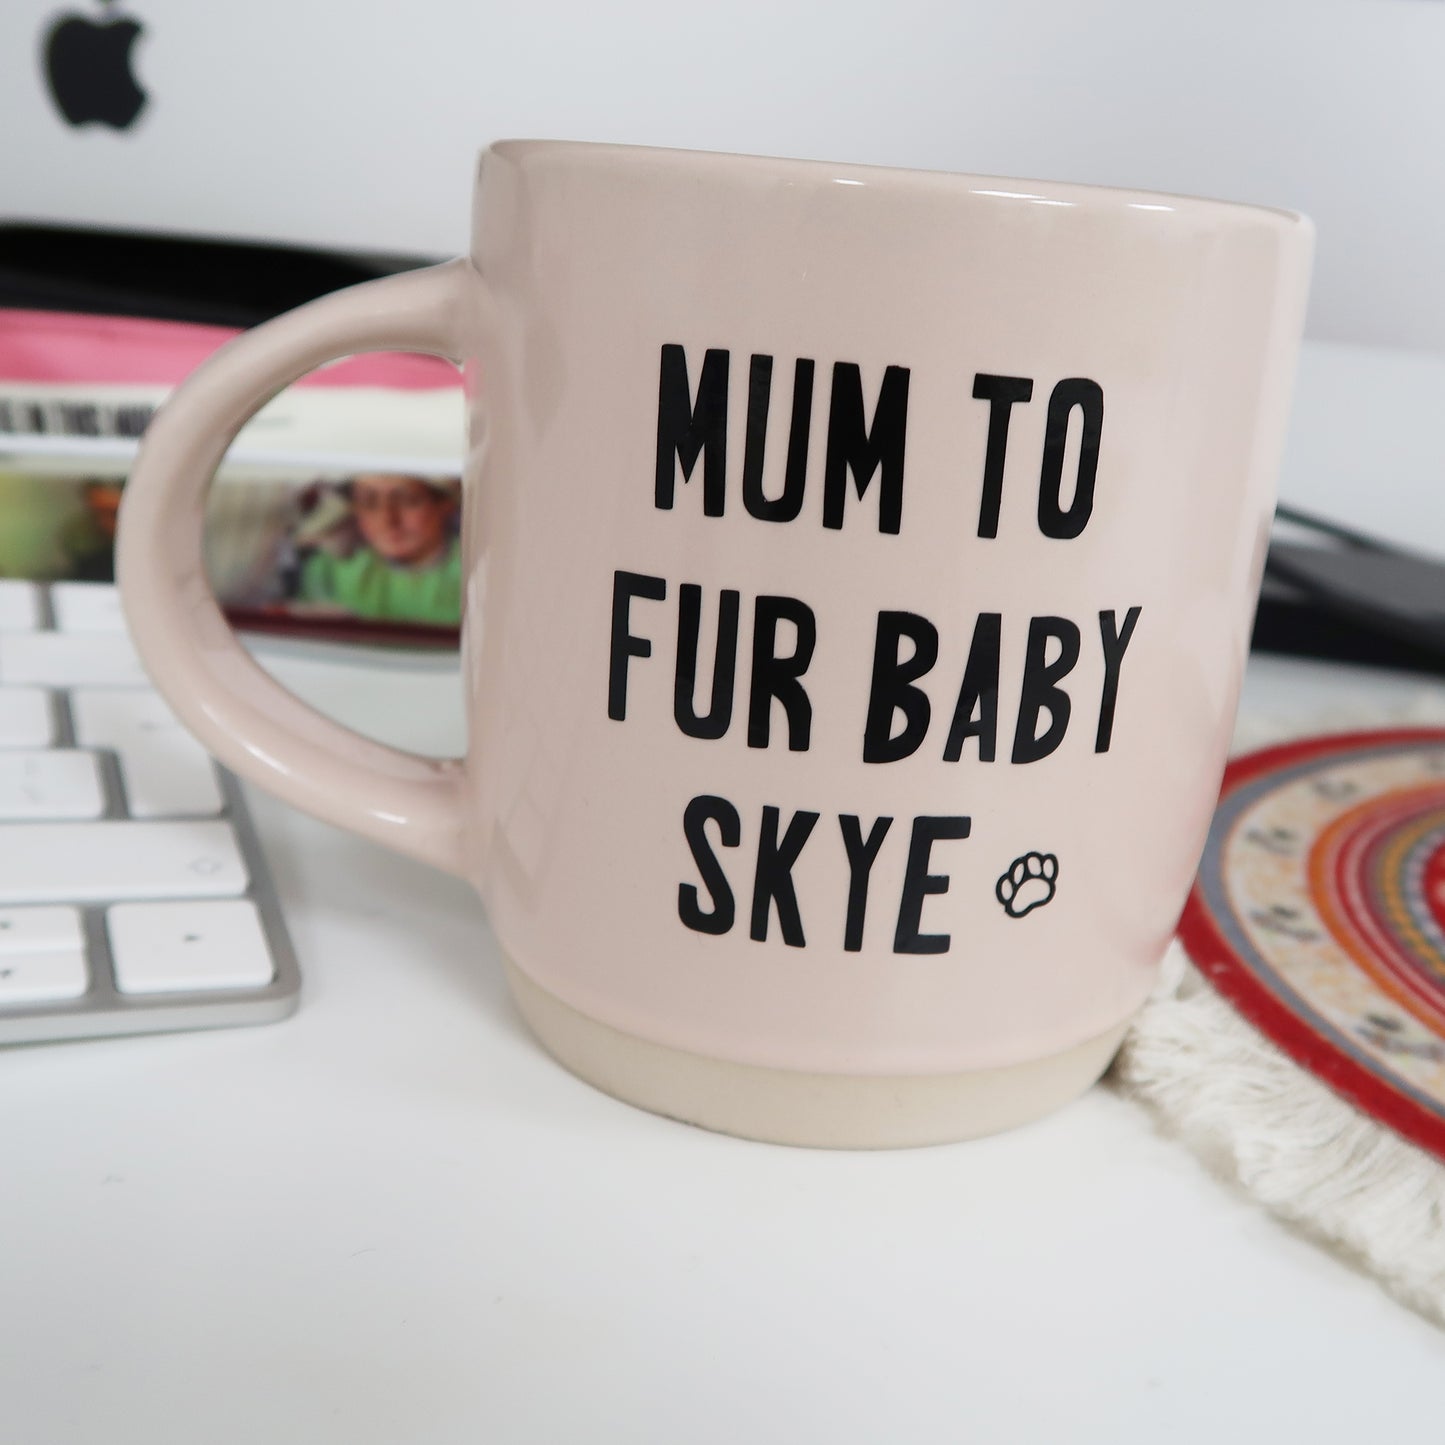 Fur Baby Mugs